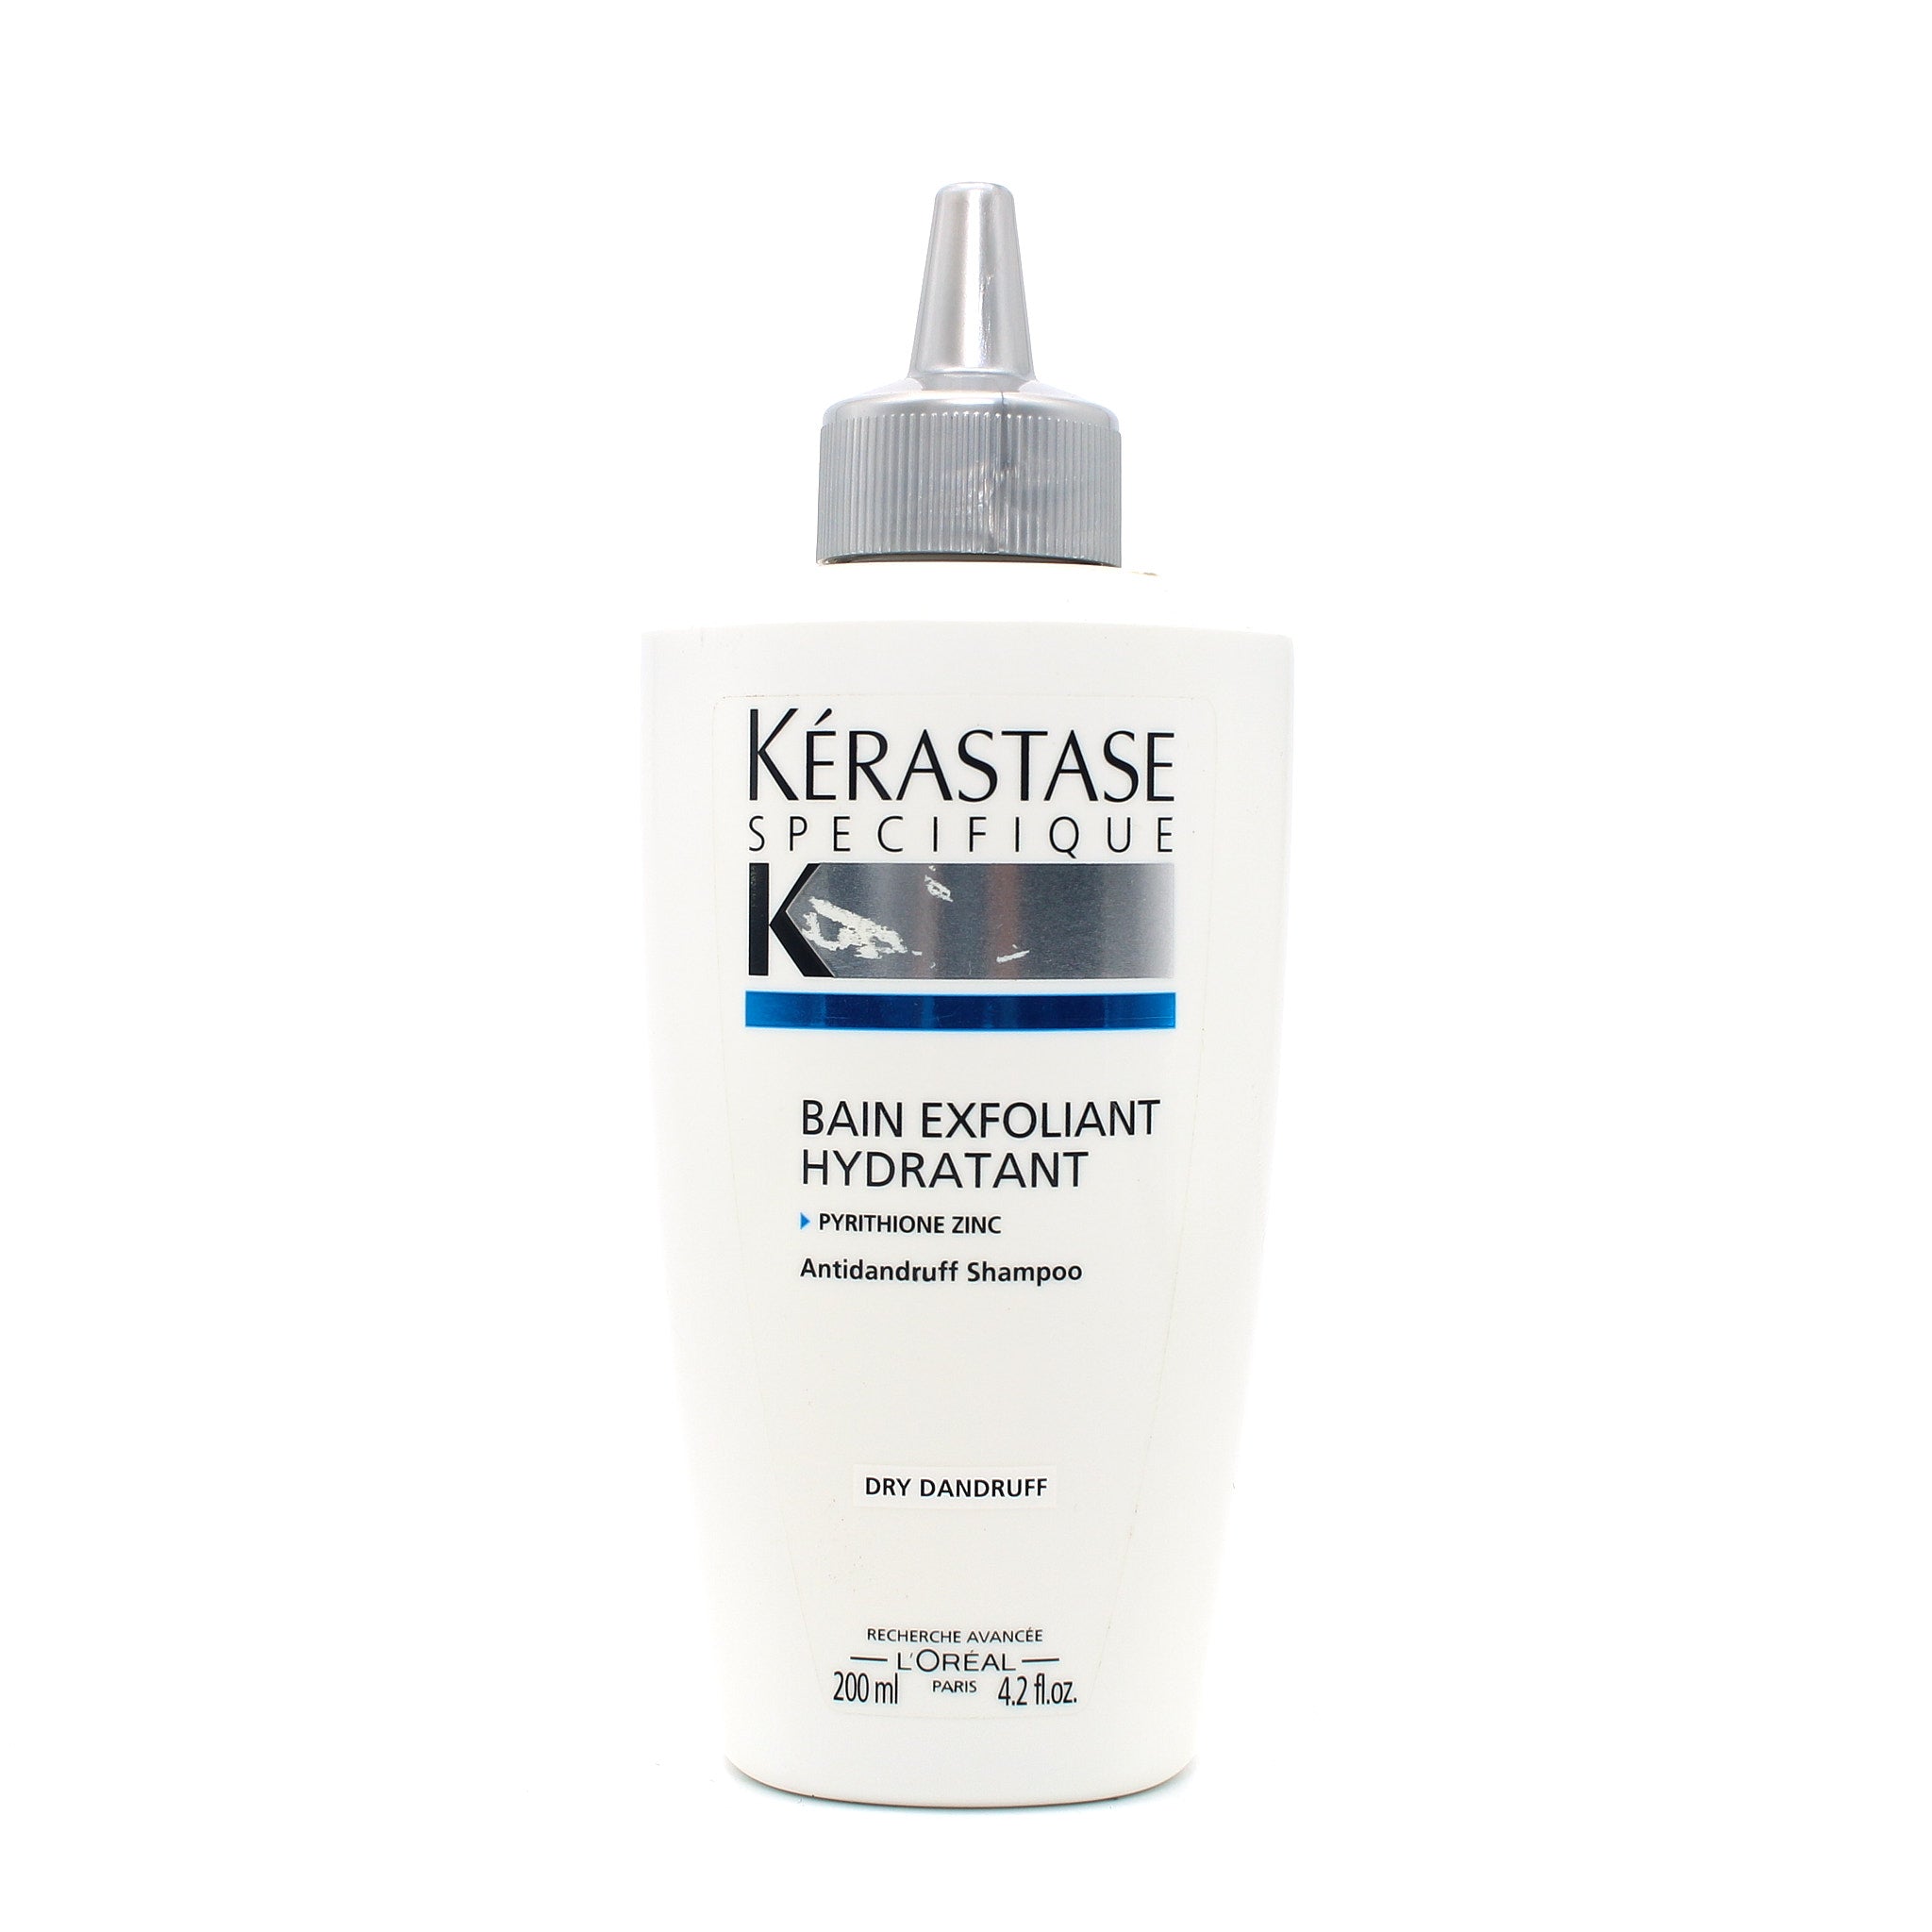 KERASTASE Specifique Bain Exfoliant Hydratant Antidandruff Shampoo 8.5 oz